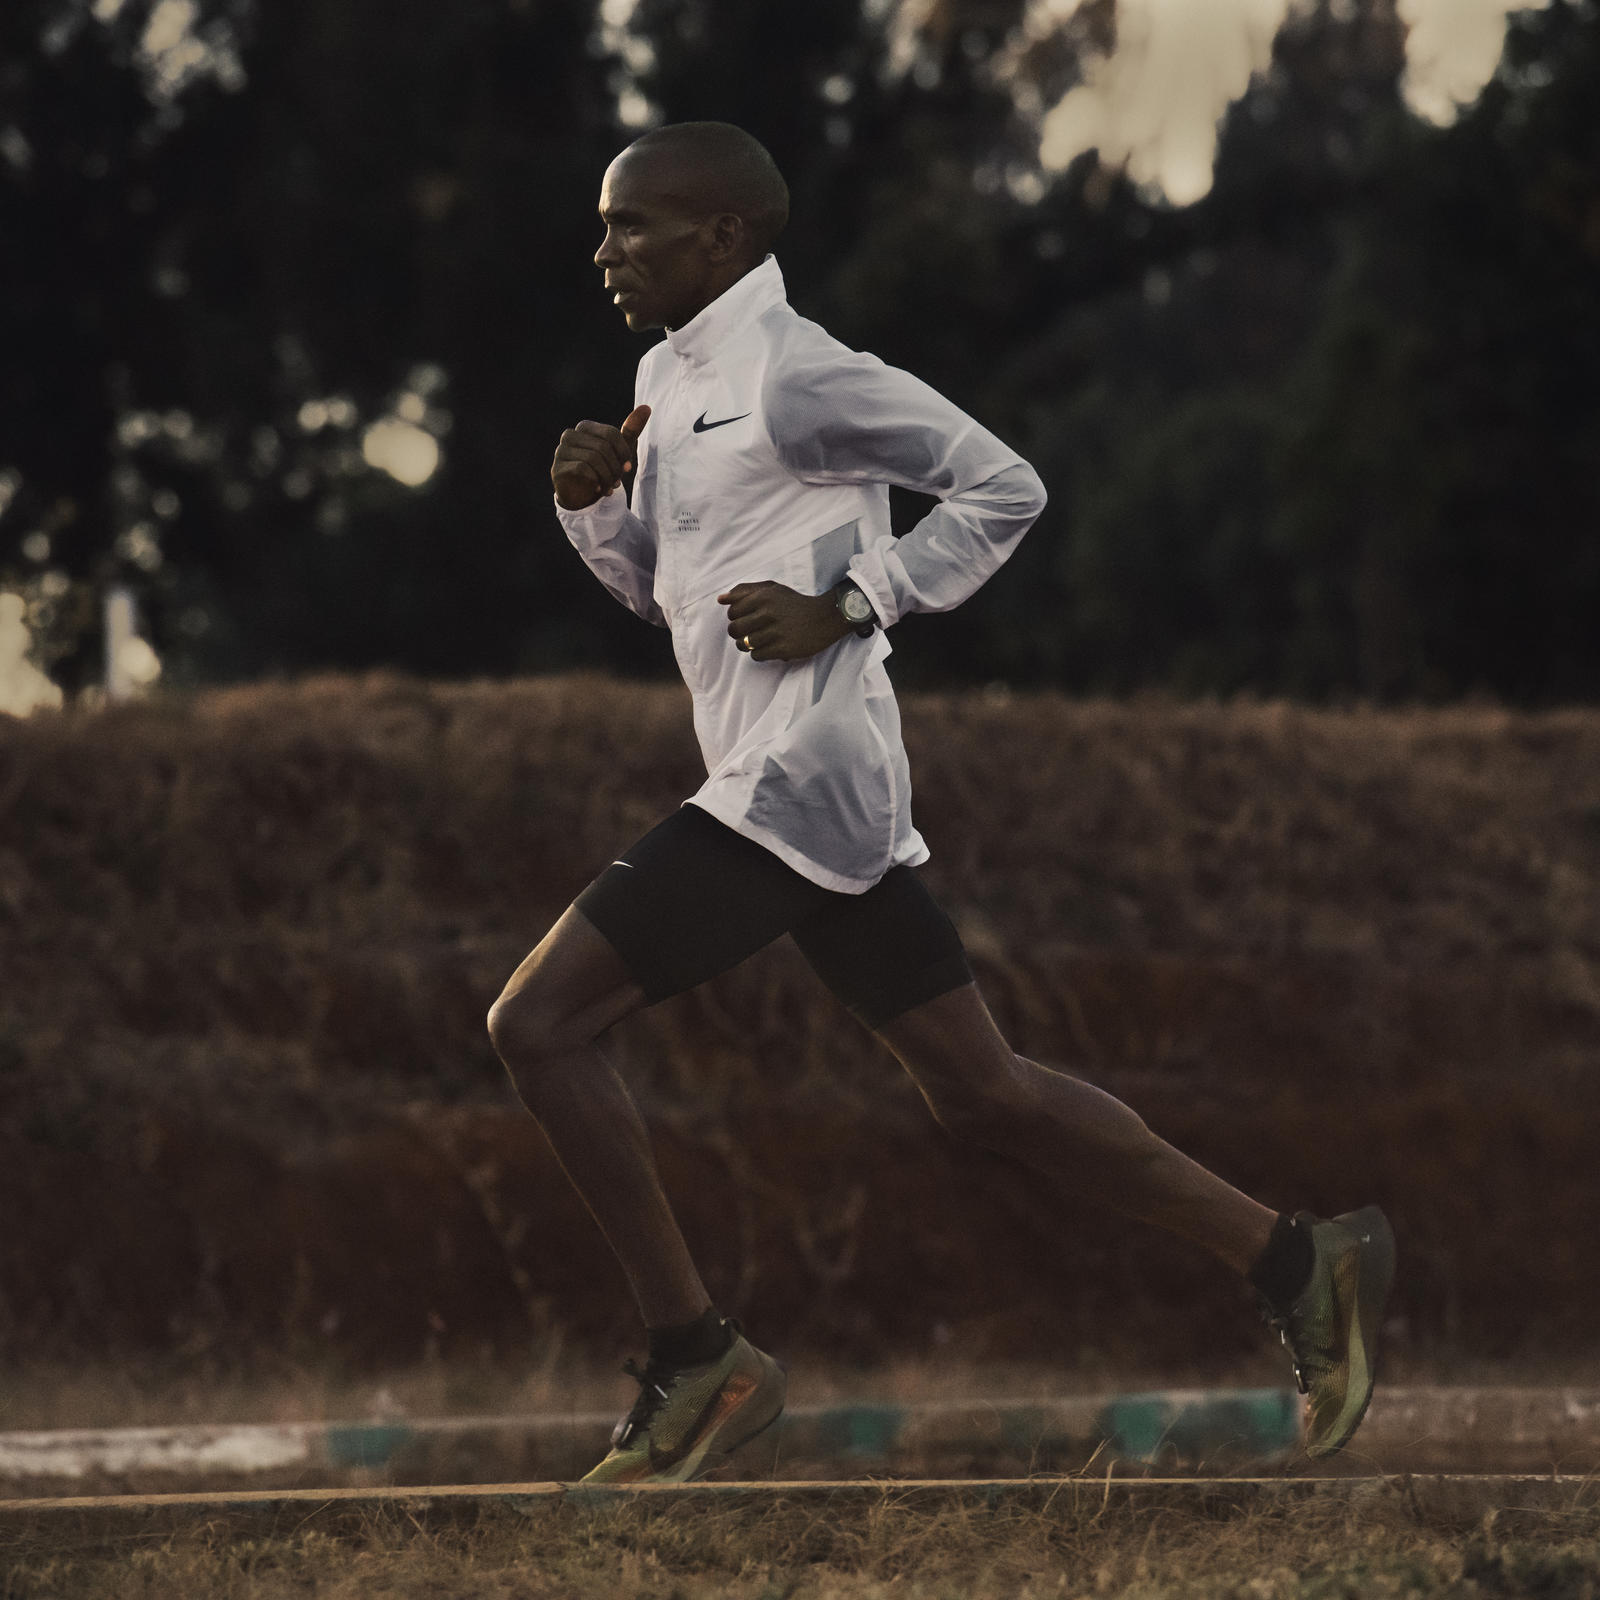 Nike To Debut First 3d Printed Shoe Upper At London Marathon